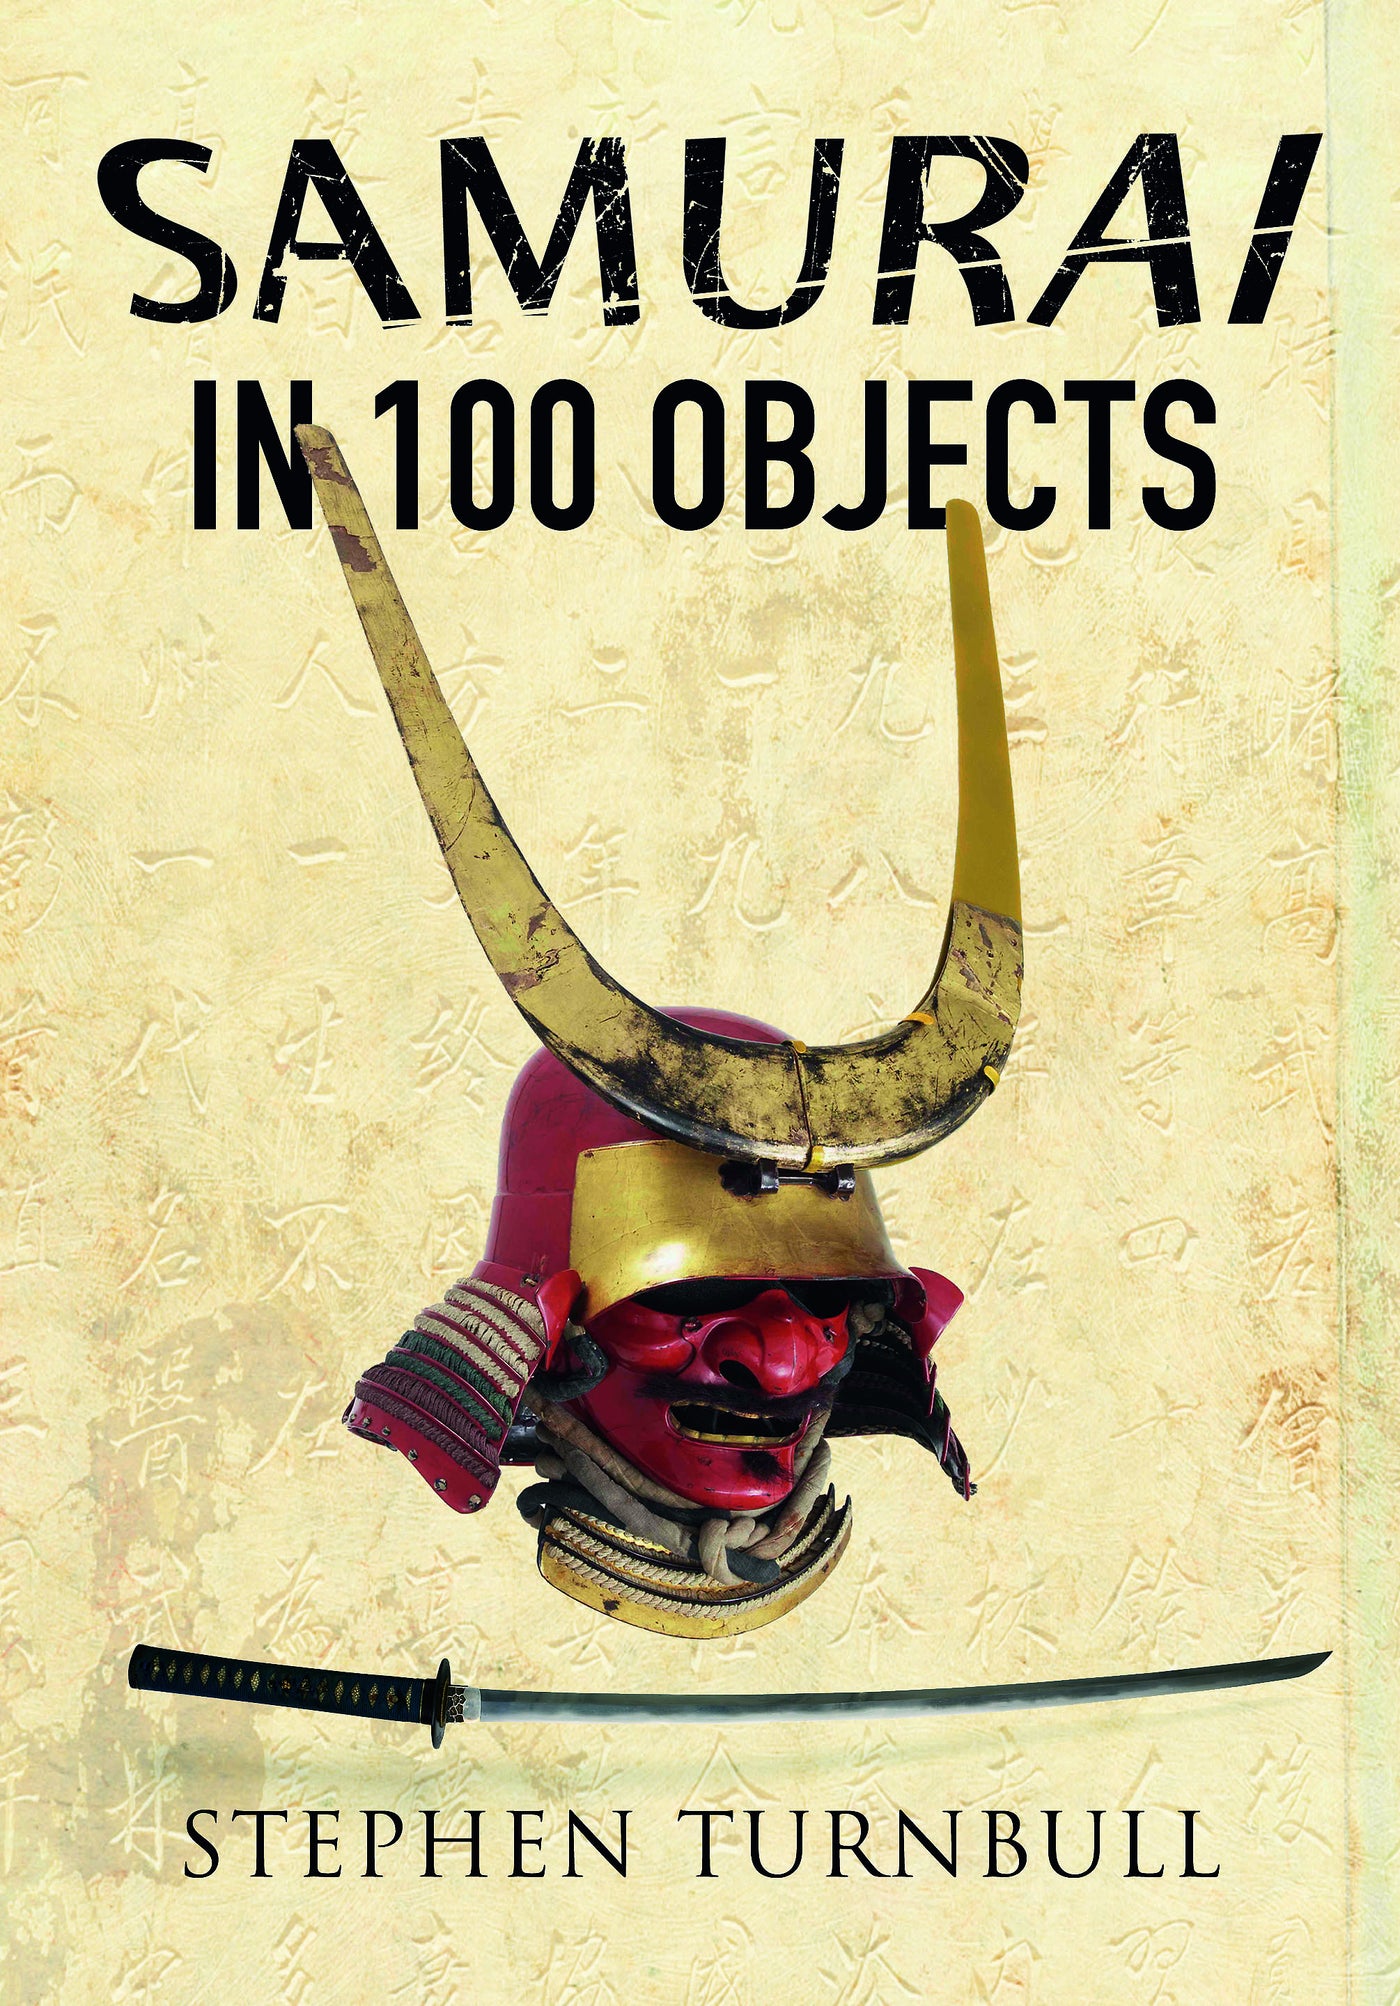 The Samurai in 100 Objects